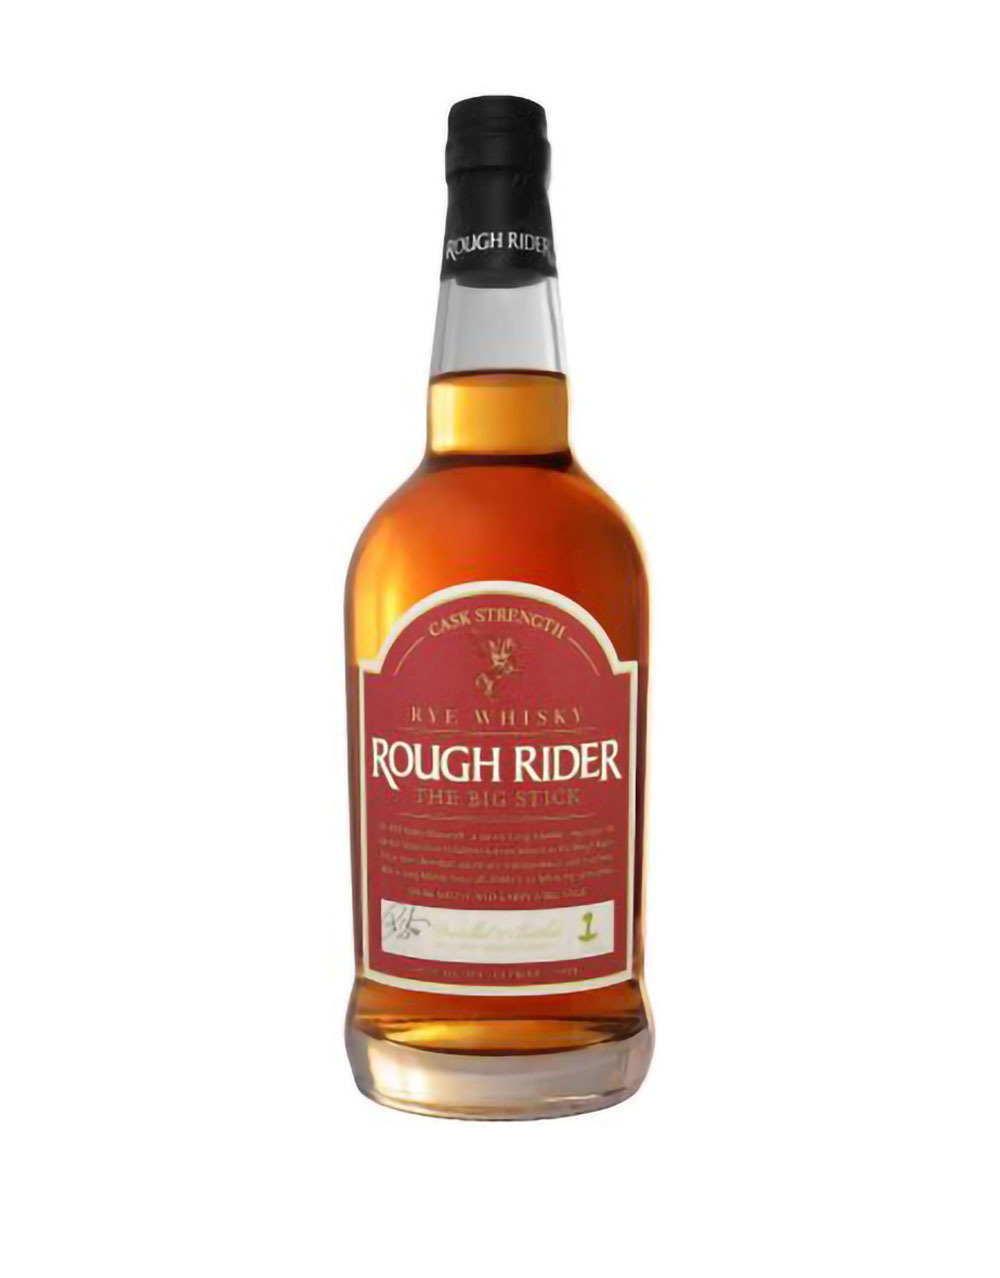 Rough Rider The Big Stick Cask Strength Rye Whisky